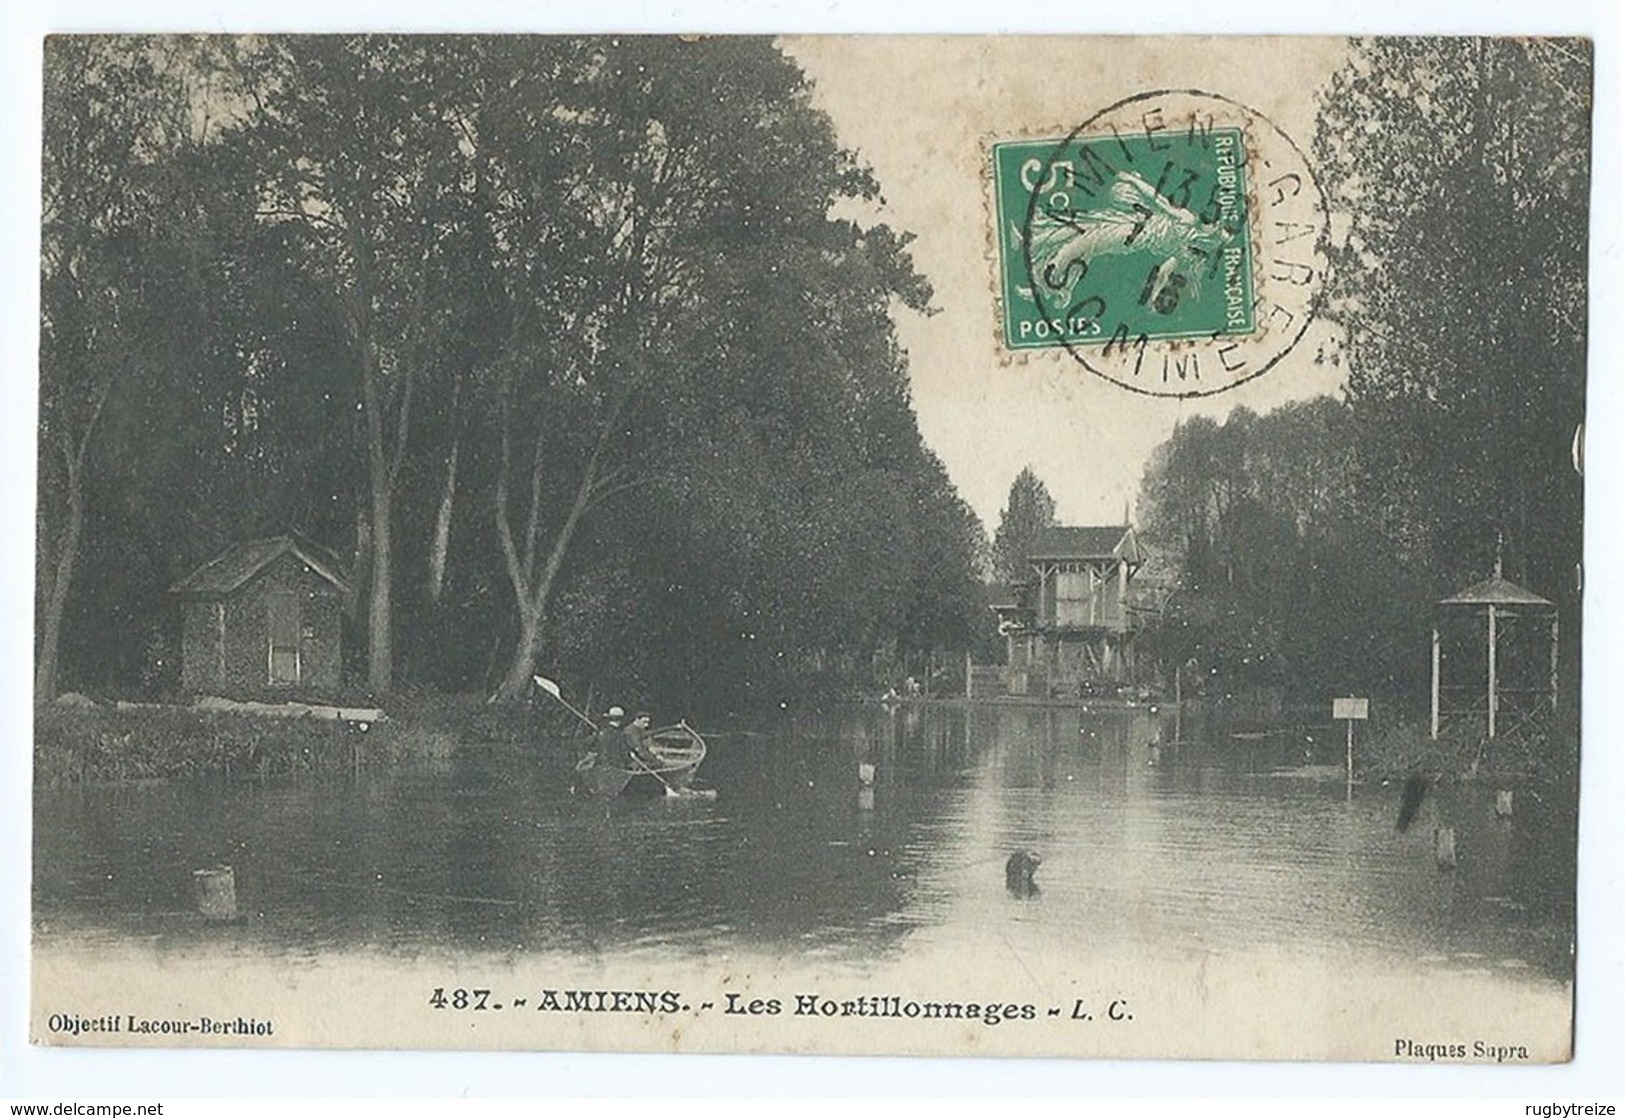 2801 Lot de 50 cartes postales anciennes - petites cartes drouille WW1 Rosny Nangis Metz Epernay Dunkerque etc...